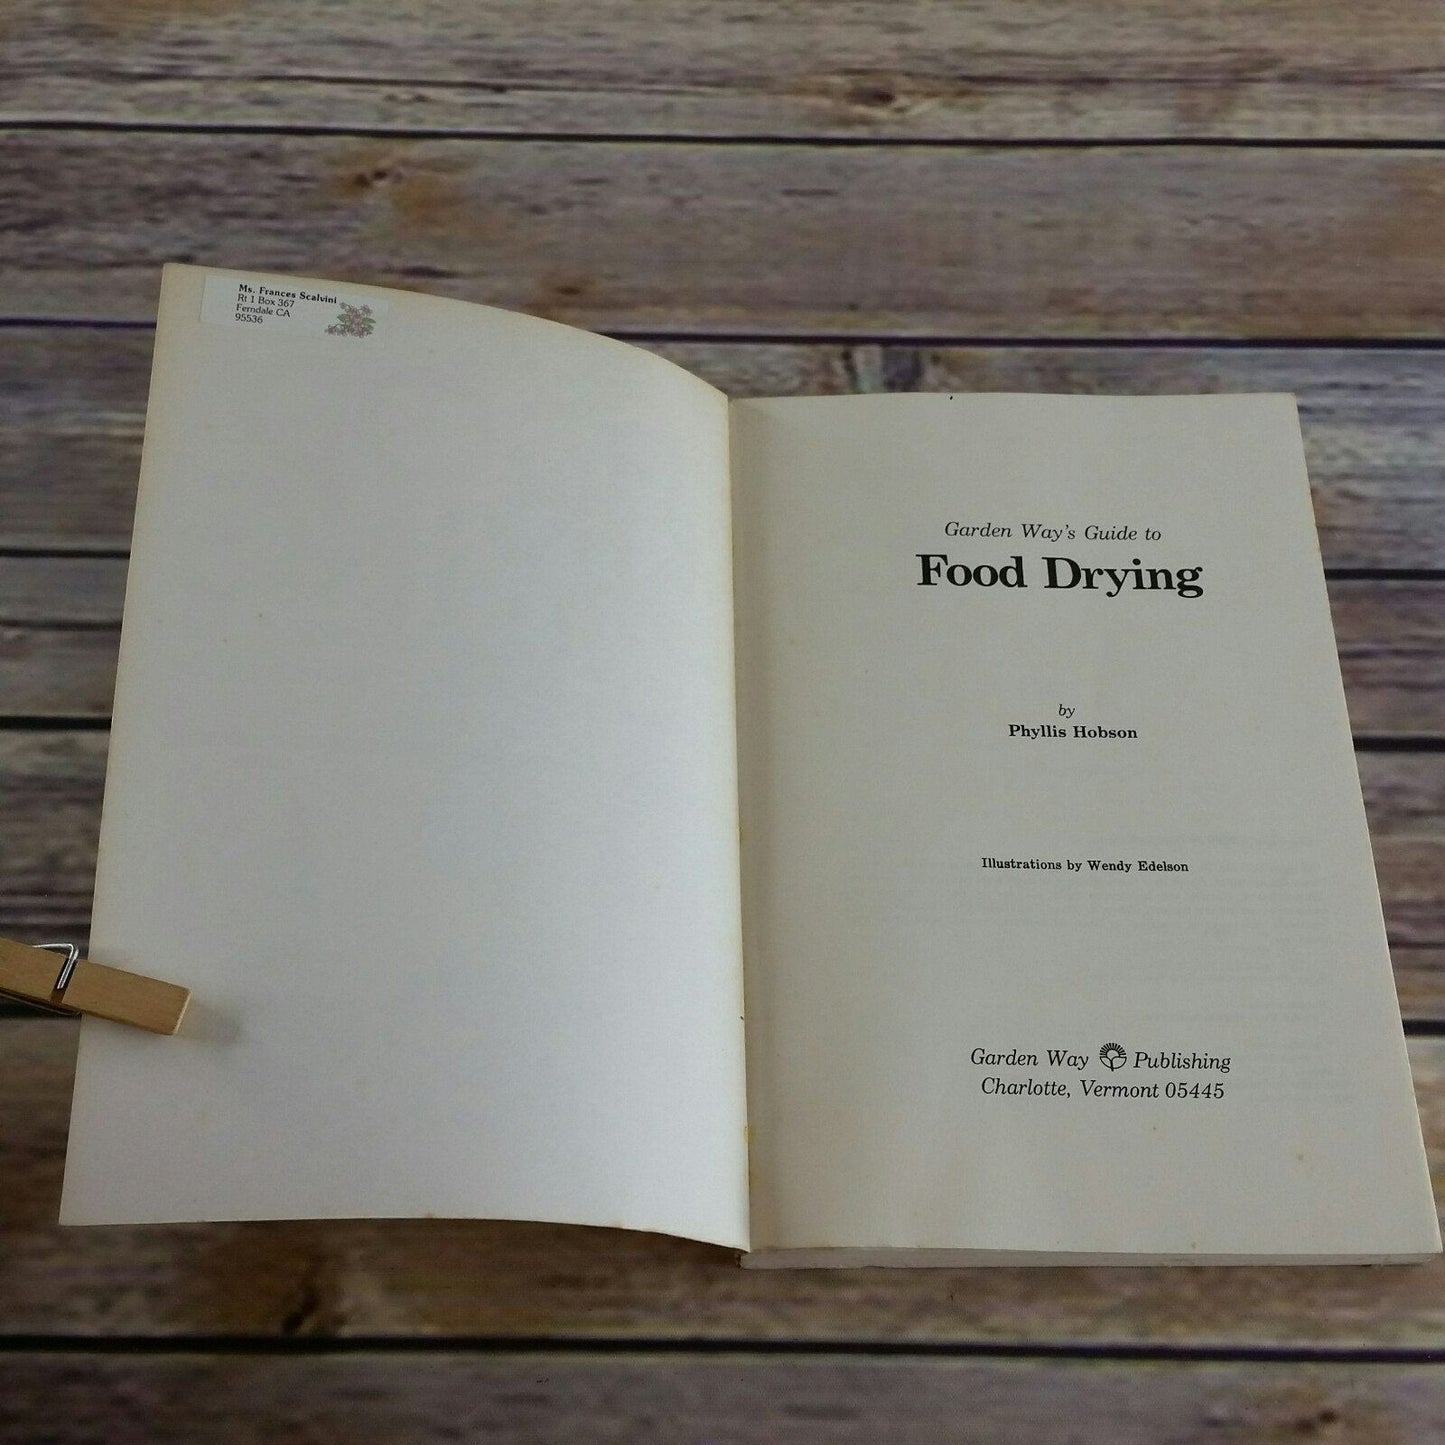 Vintage Cookbook Food Drying Guide 1980 Food Preservation Recipes Drying Storing Preserving Vegetables Fruits Herbs Garden Way Paperback